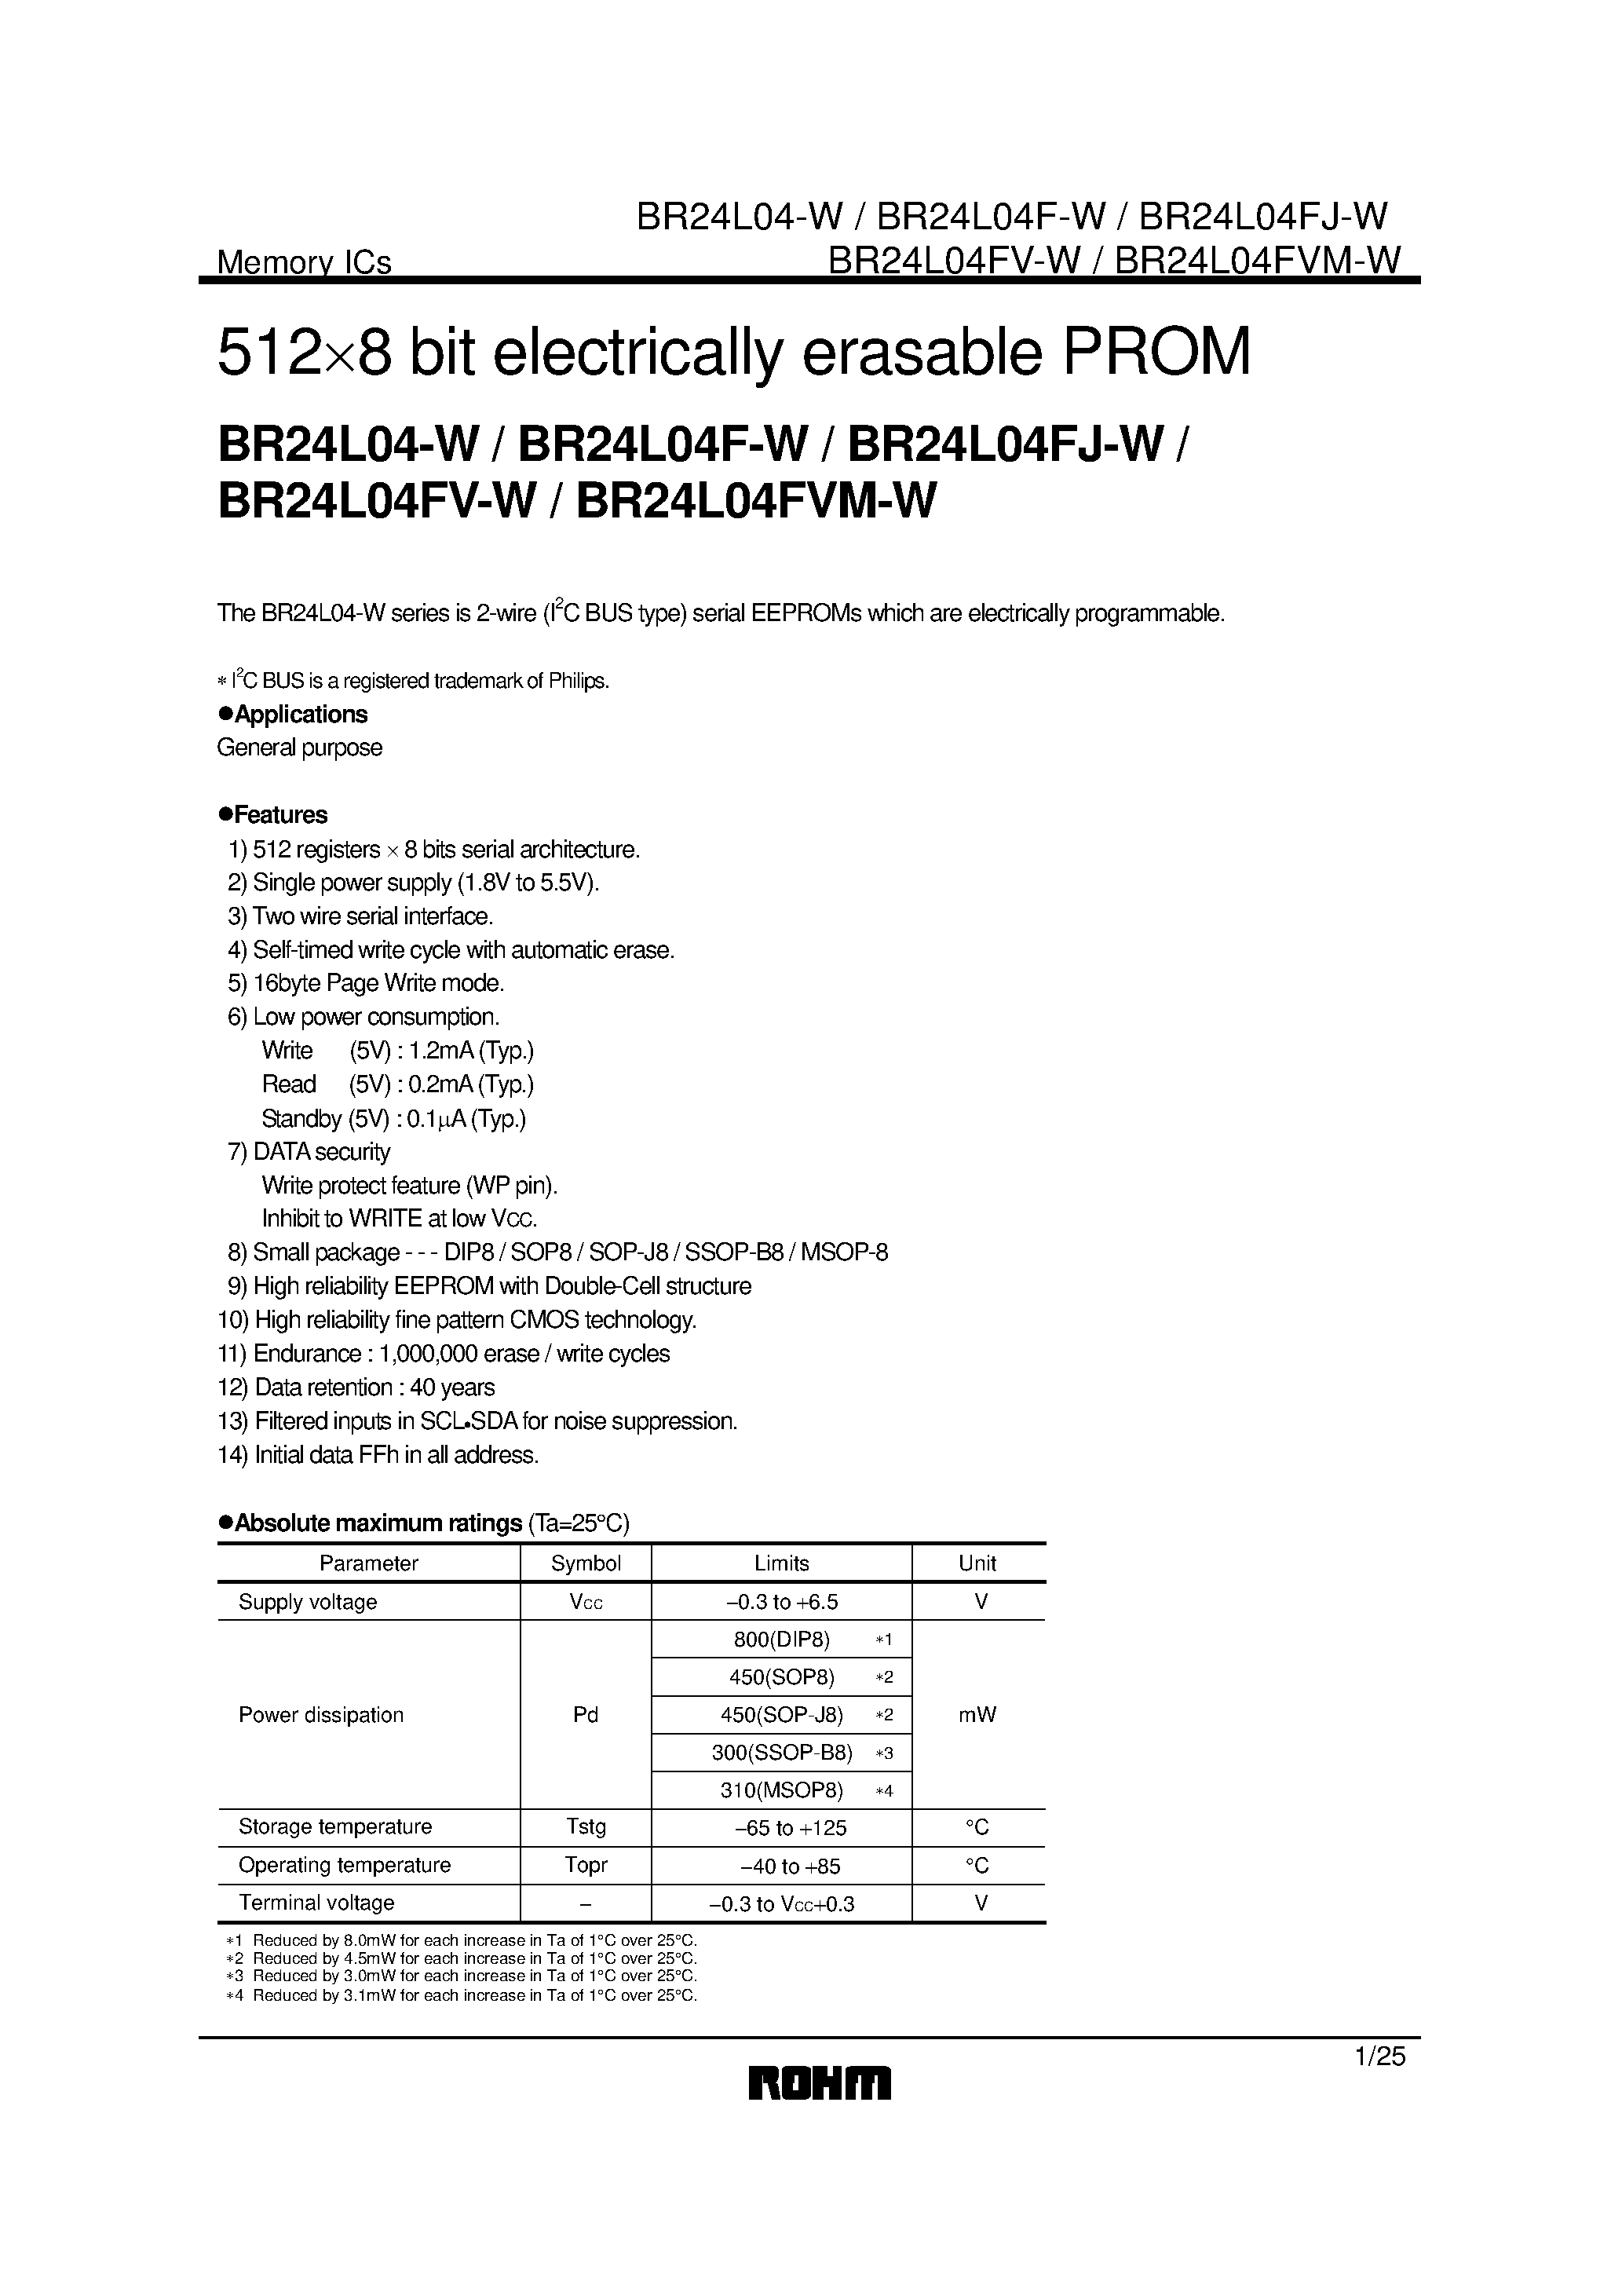 Datasheet BR24L04F-W - 5128 bit electrically erasable PROM page 1